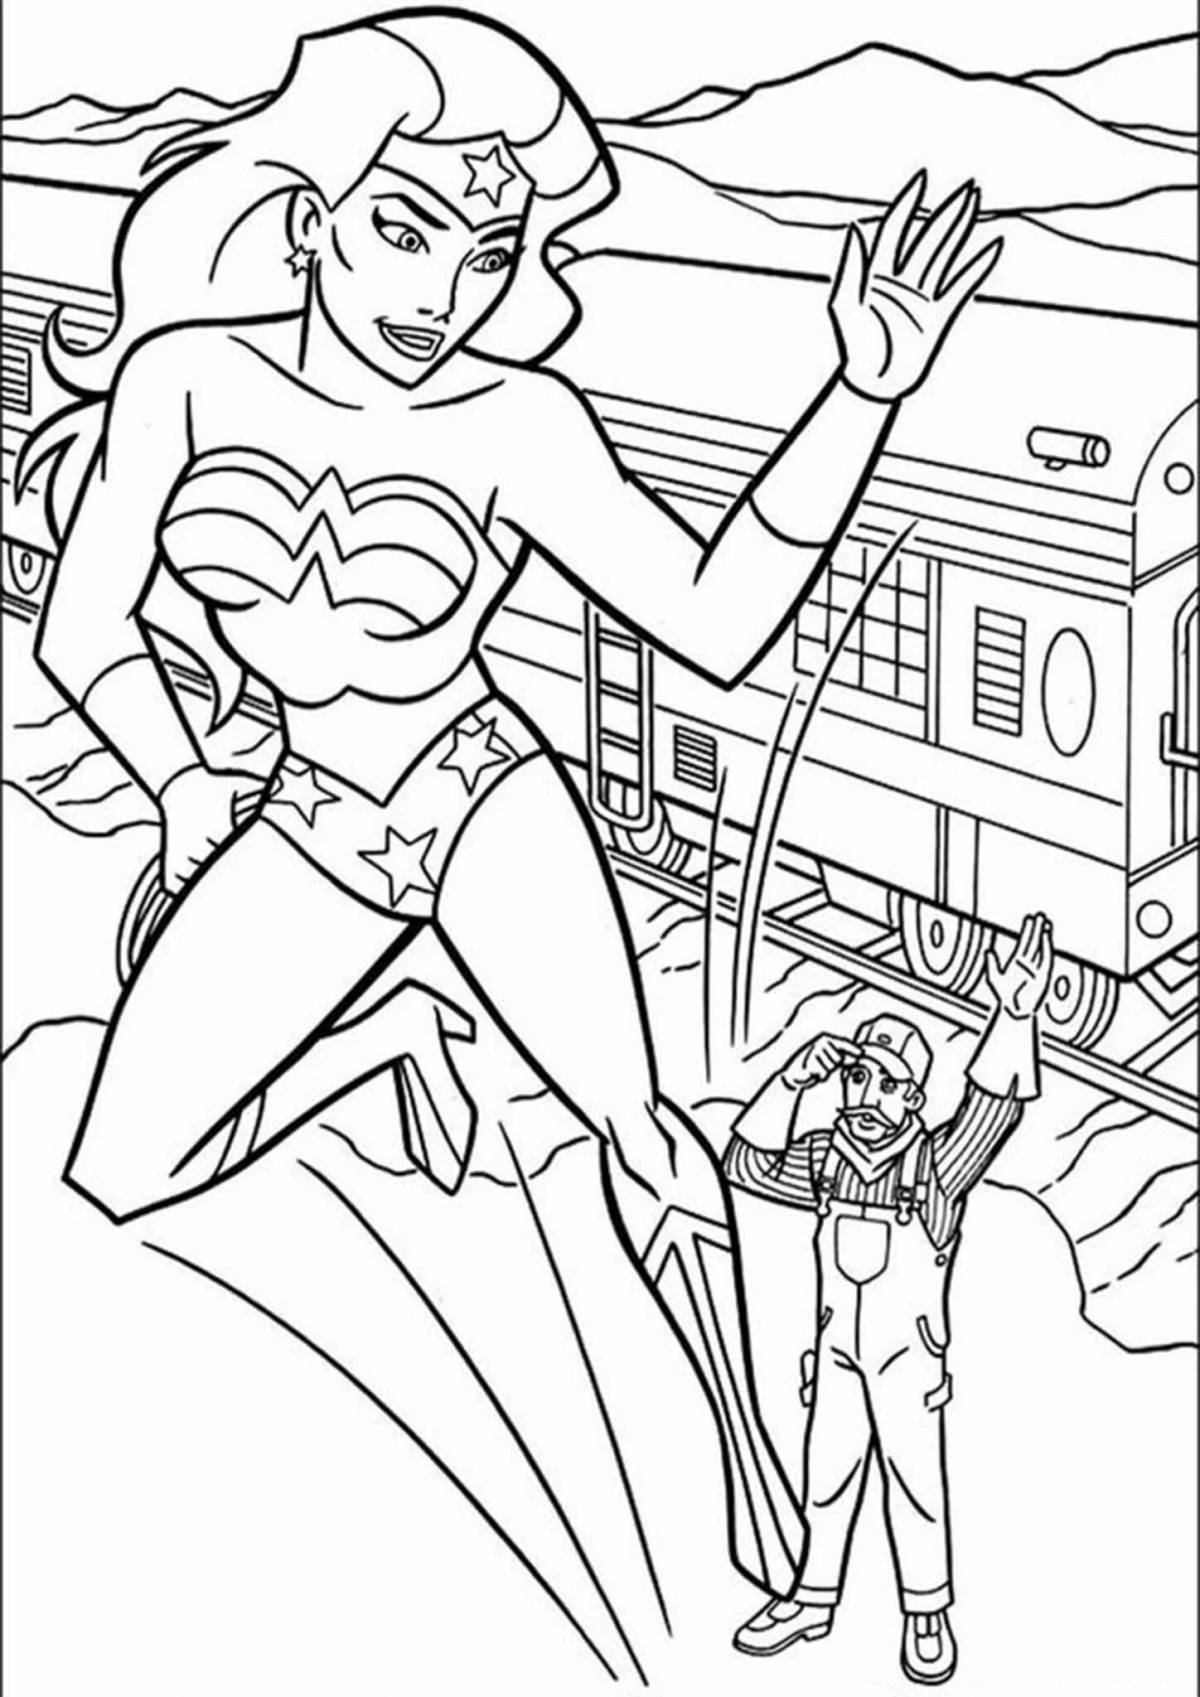 Fabulous superwoman coloring page